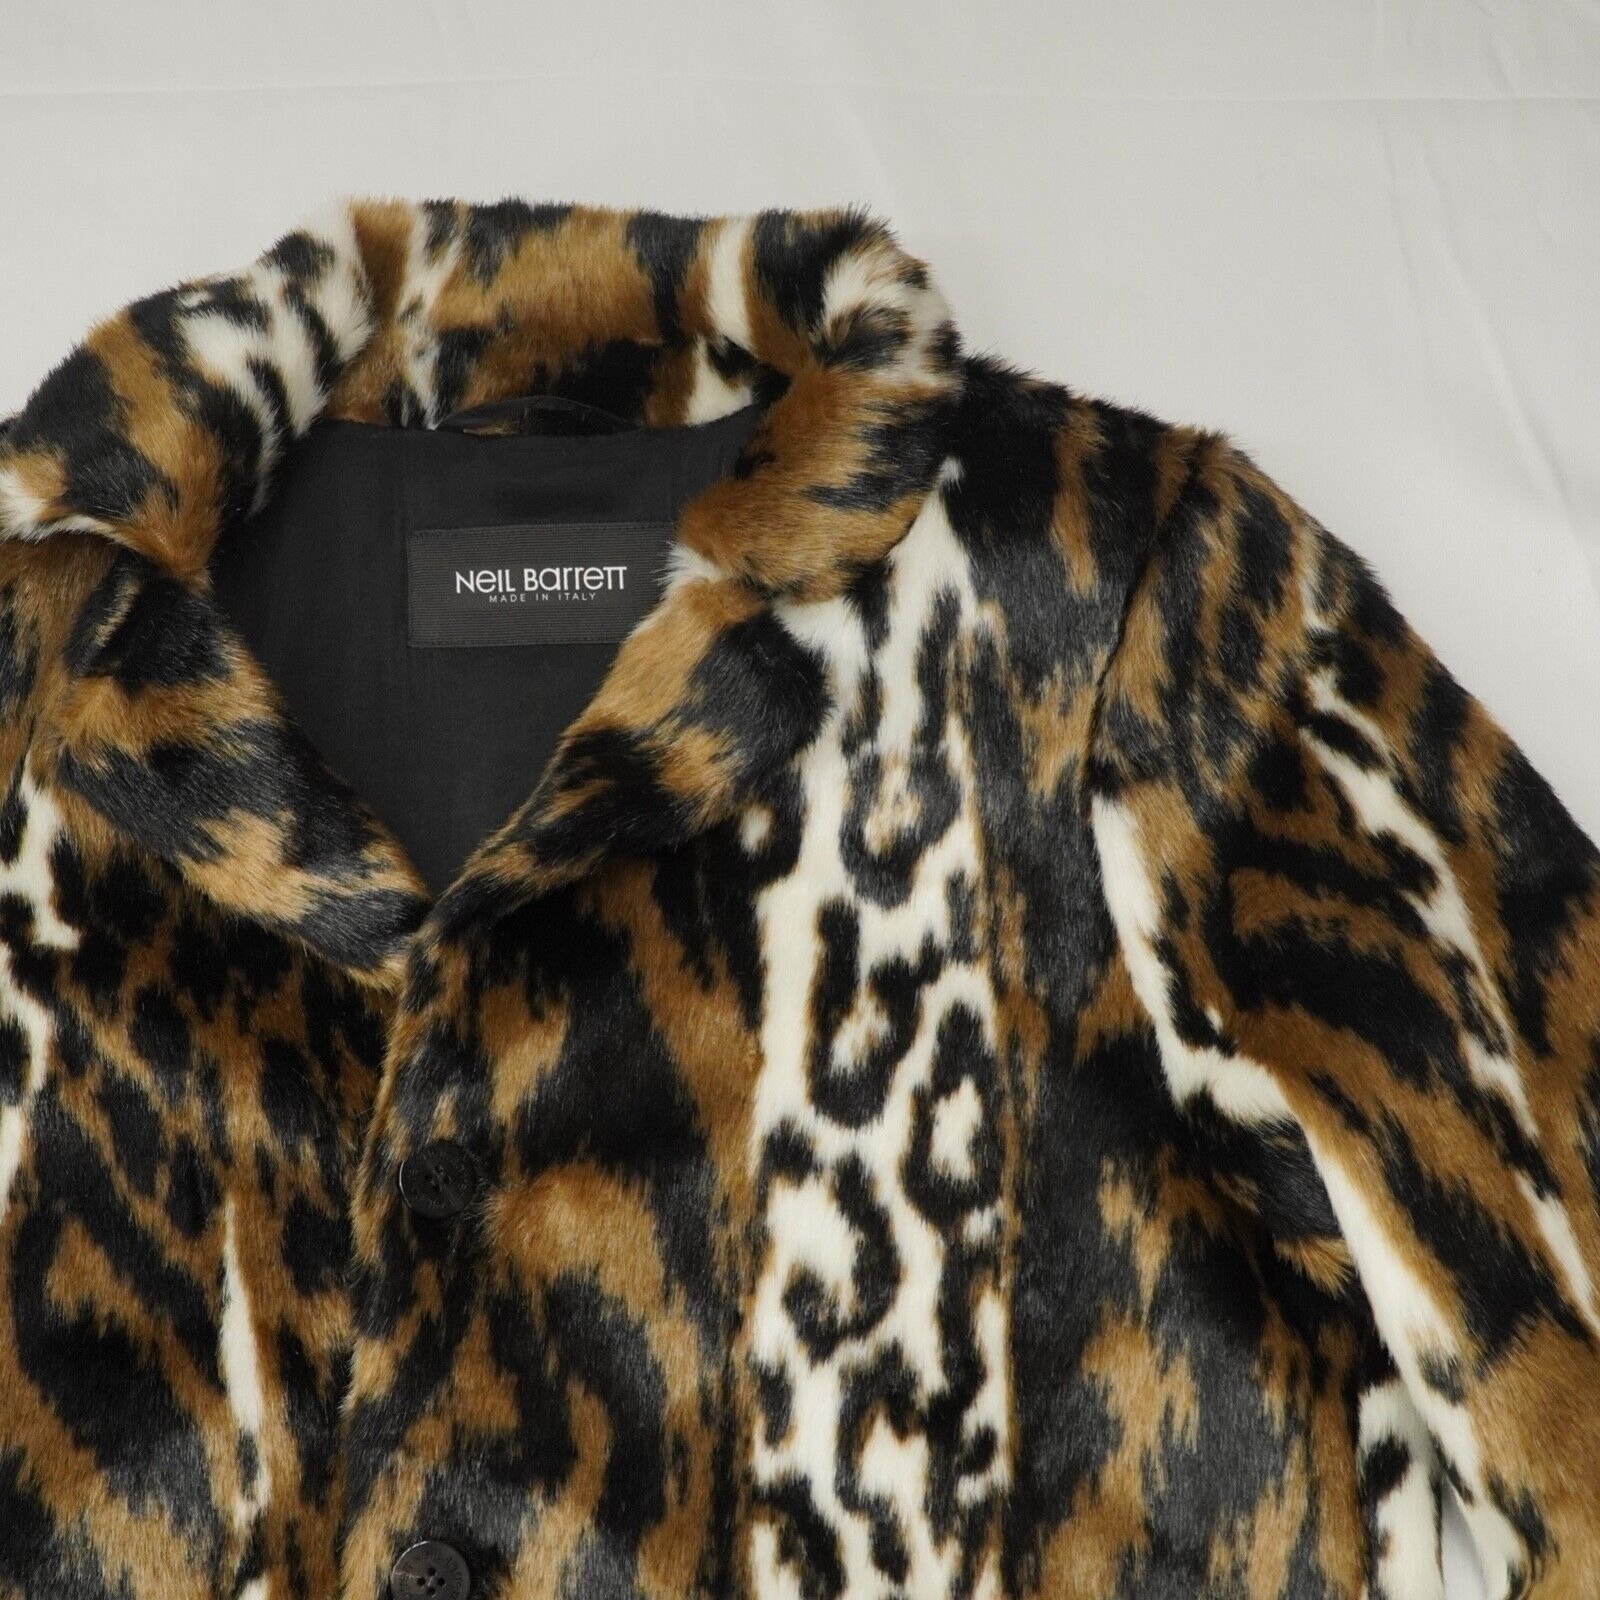 Neil Barrett Leopard Jacket Coat Tan and White Faux-Fur Eco - 14